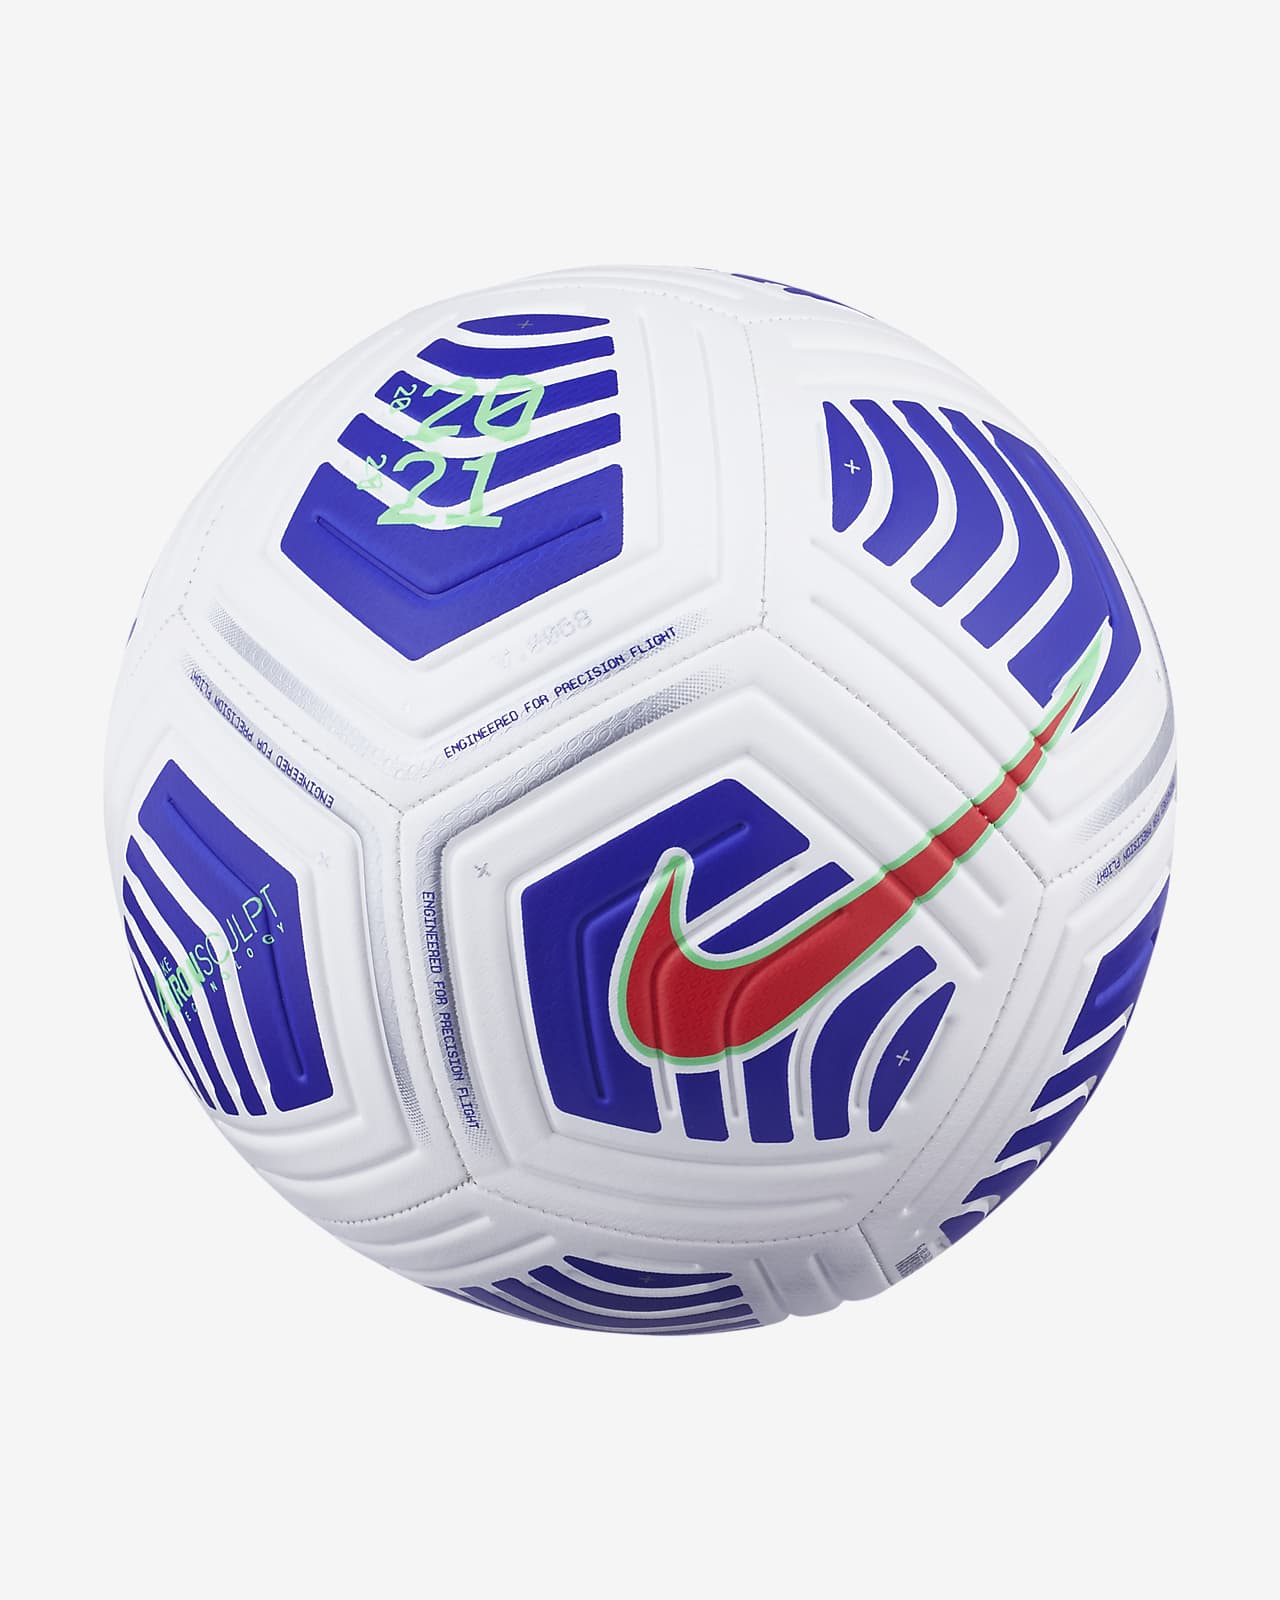 Nike公式 ナイキ ストライク サッカーボール オンラインストア 通販サイト